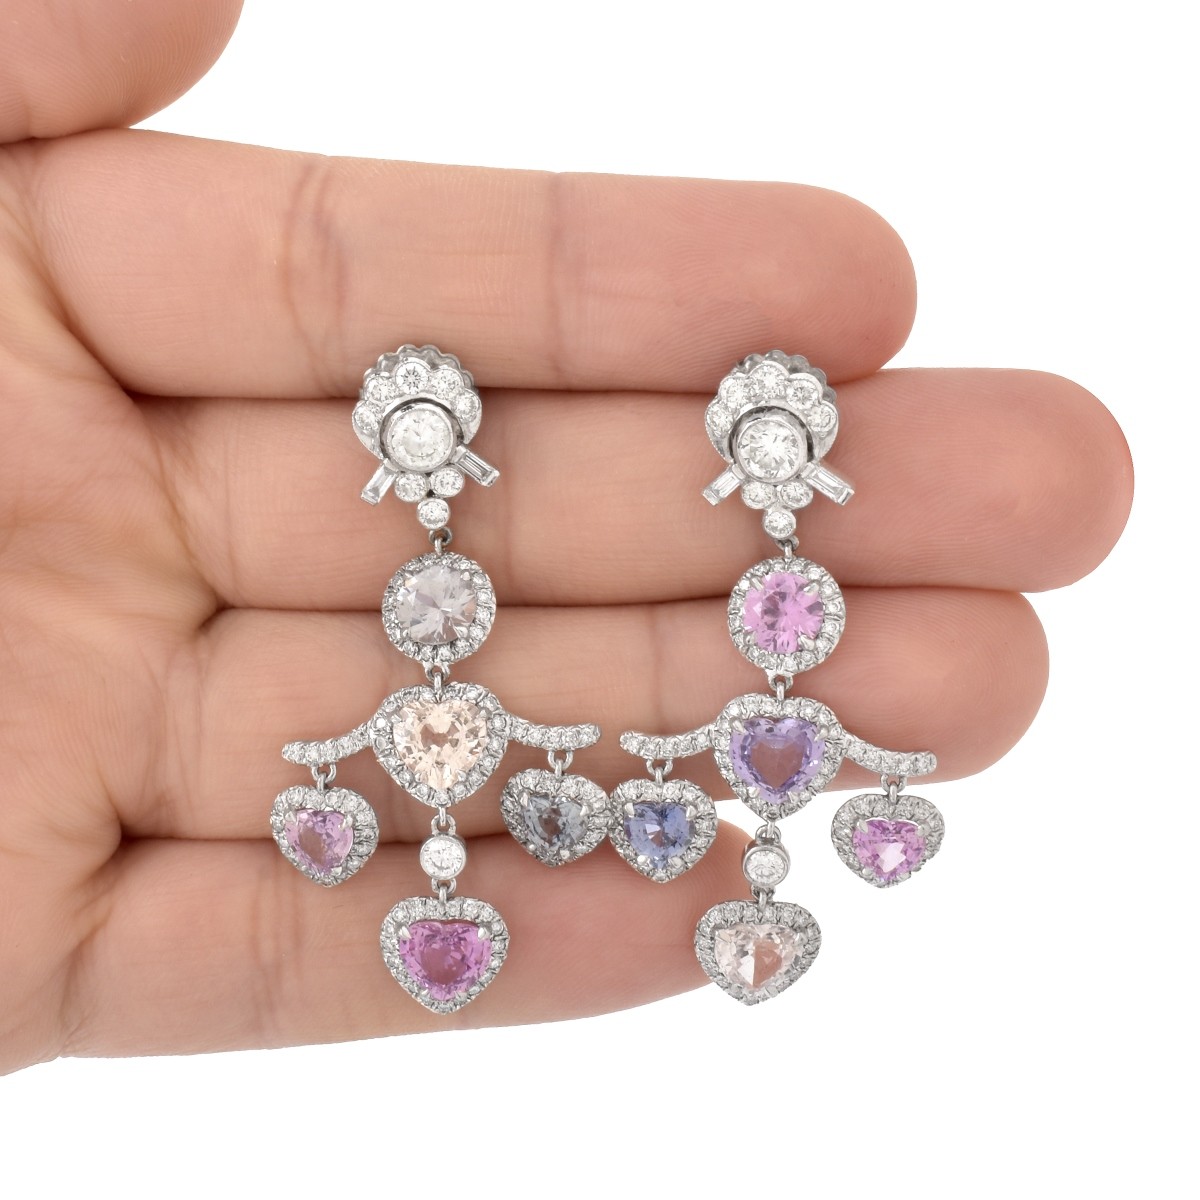 Sapphire, Diamond, Platinum and 18K Earrings